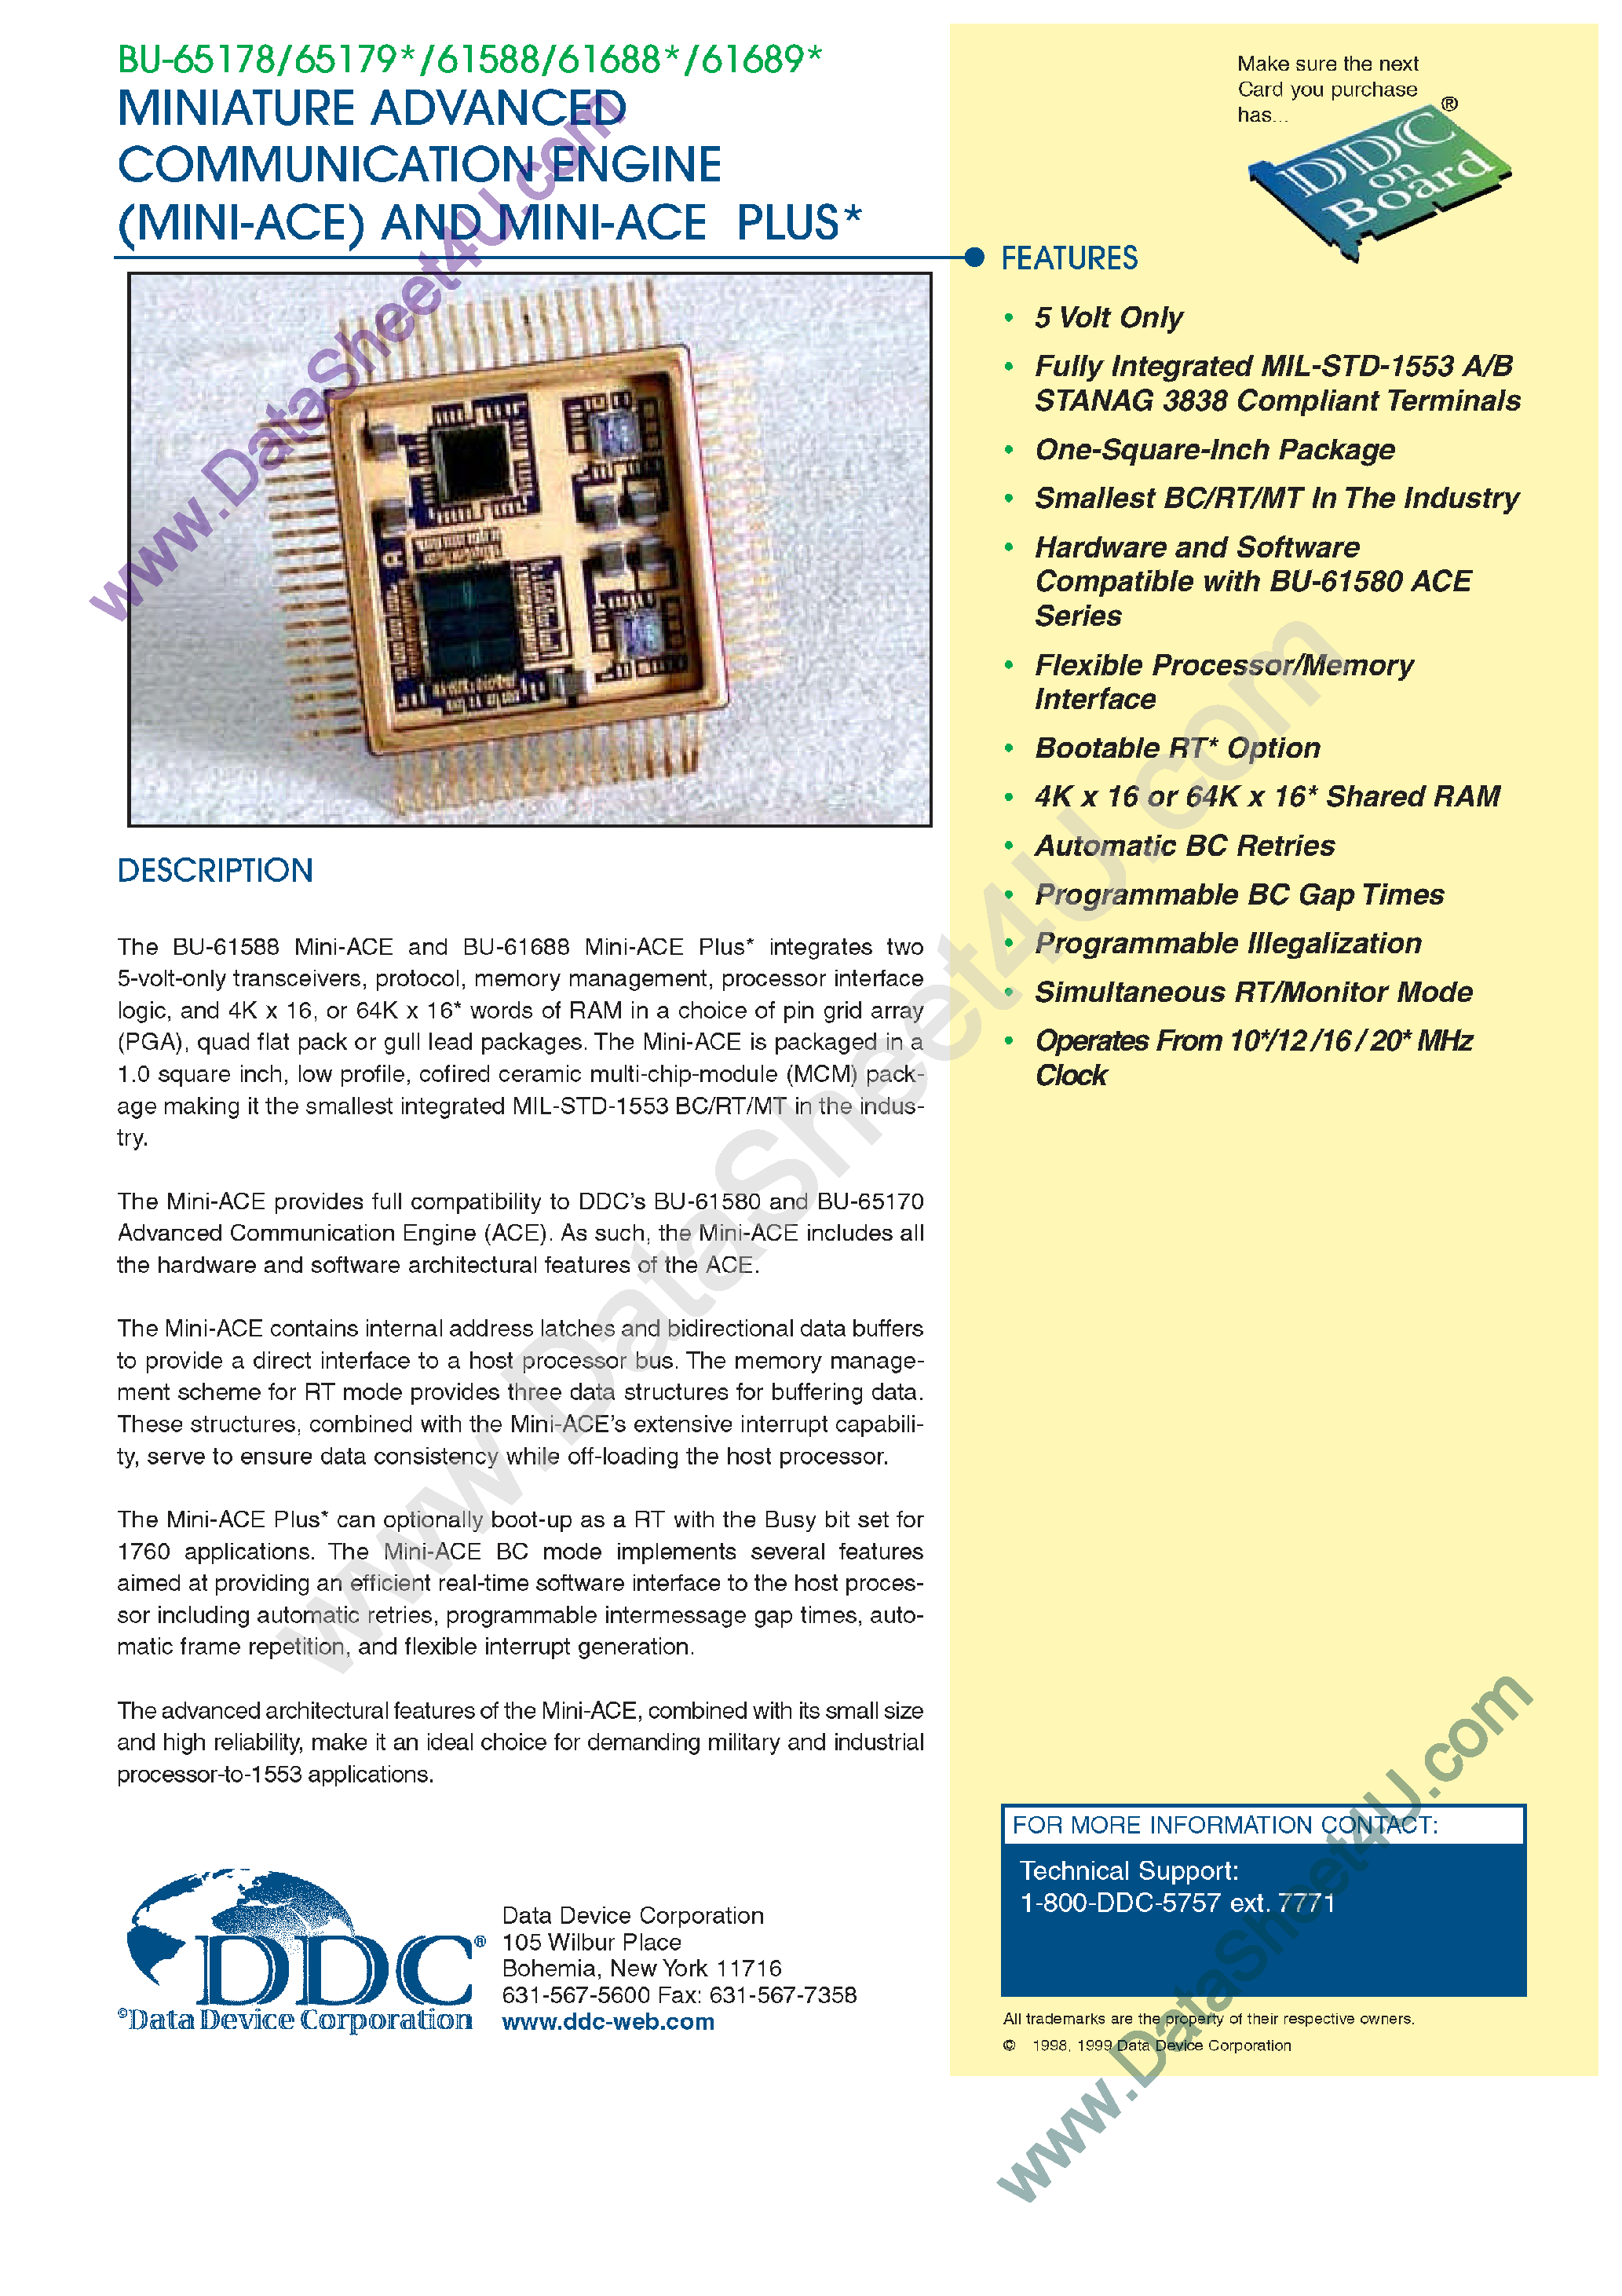 Datasheet BU-65179 - Miniature Advanced Communication Engine and Mini-Ace Plus page 1